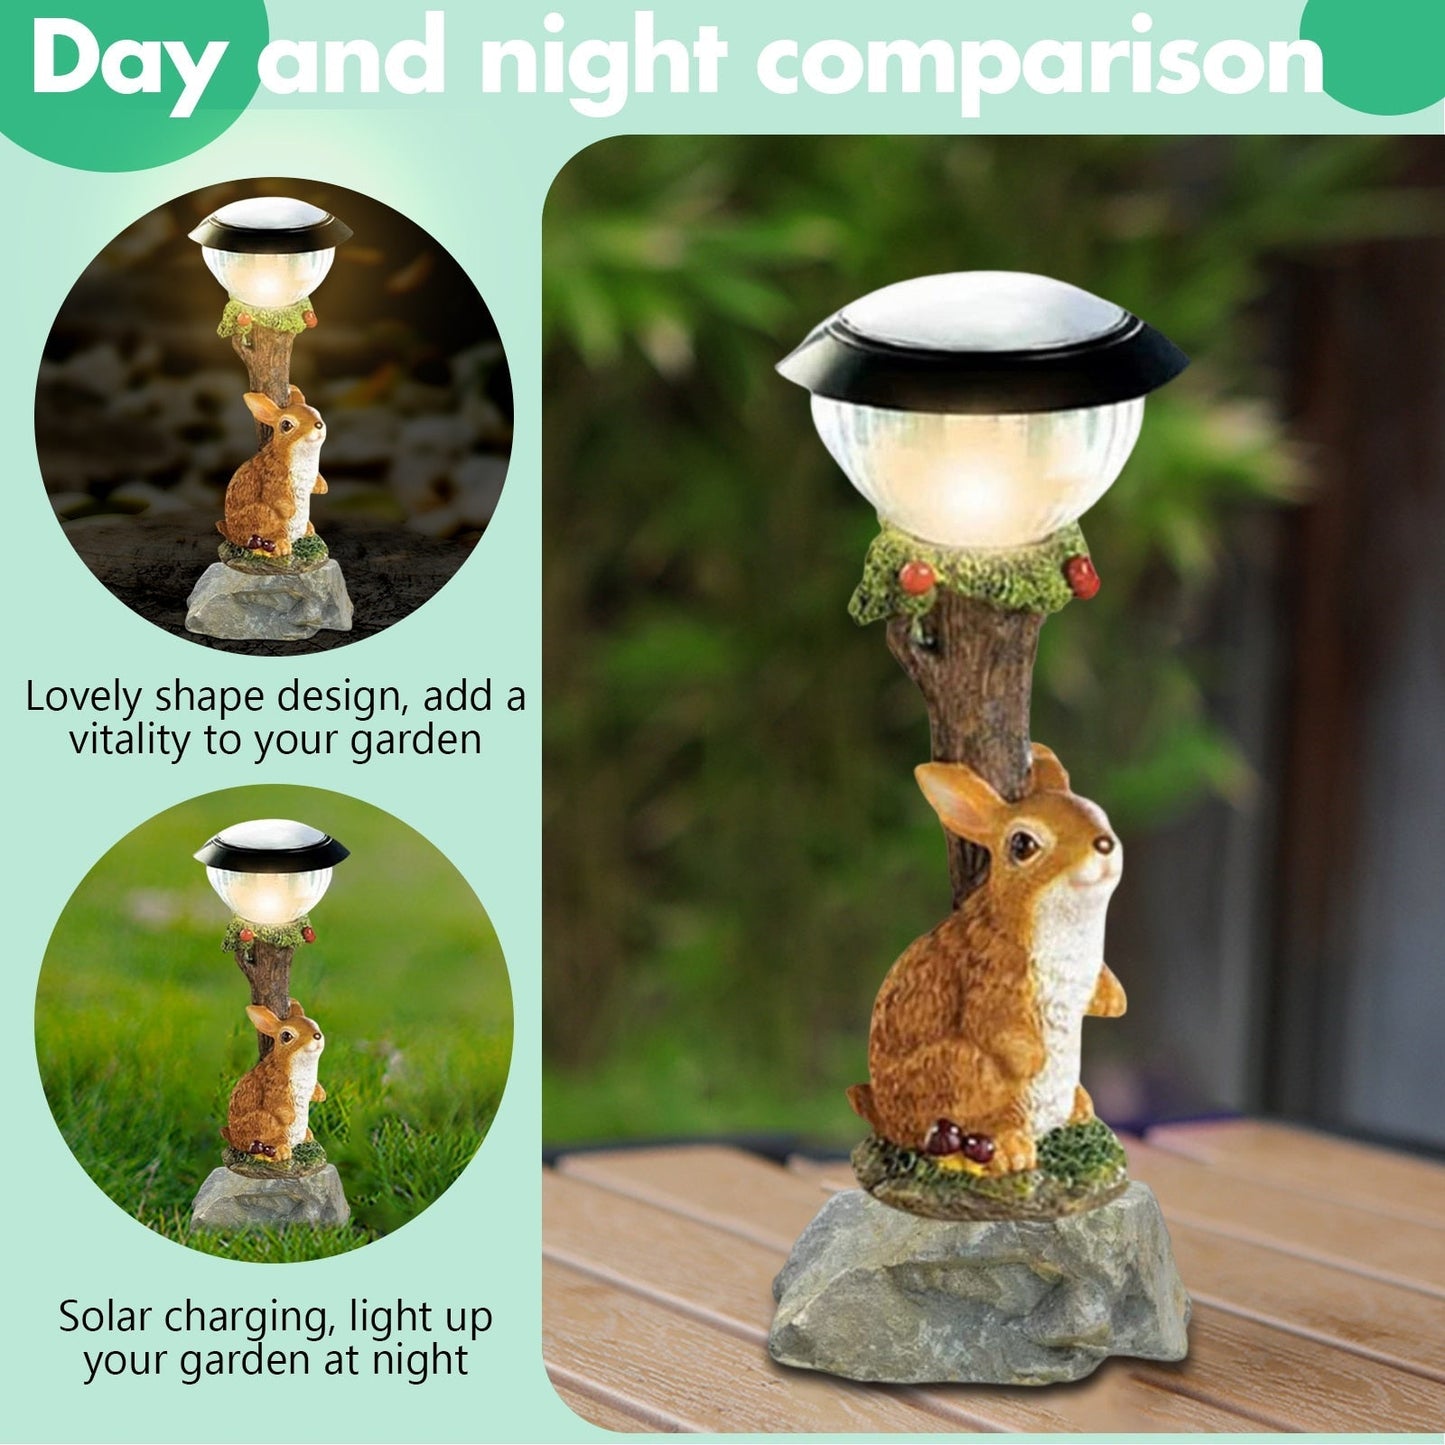 Solar LED Light Animals Decorative Figurine With Light Outdoor Garden Lawn